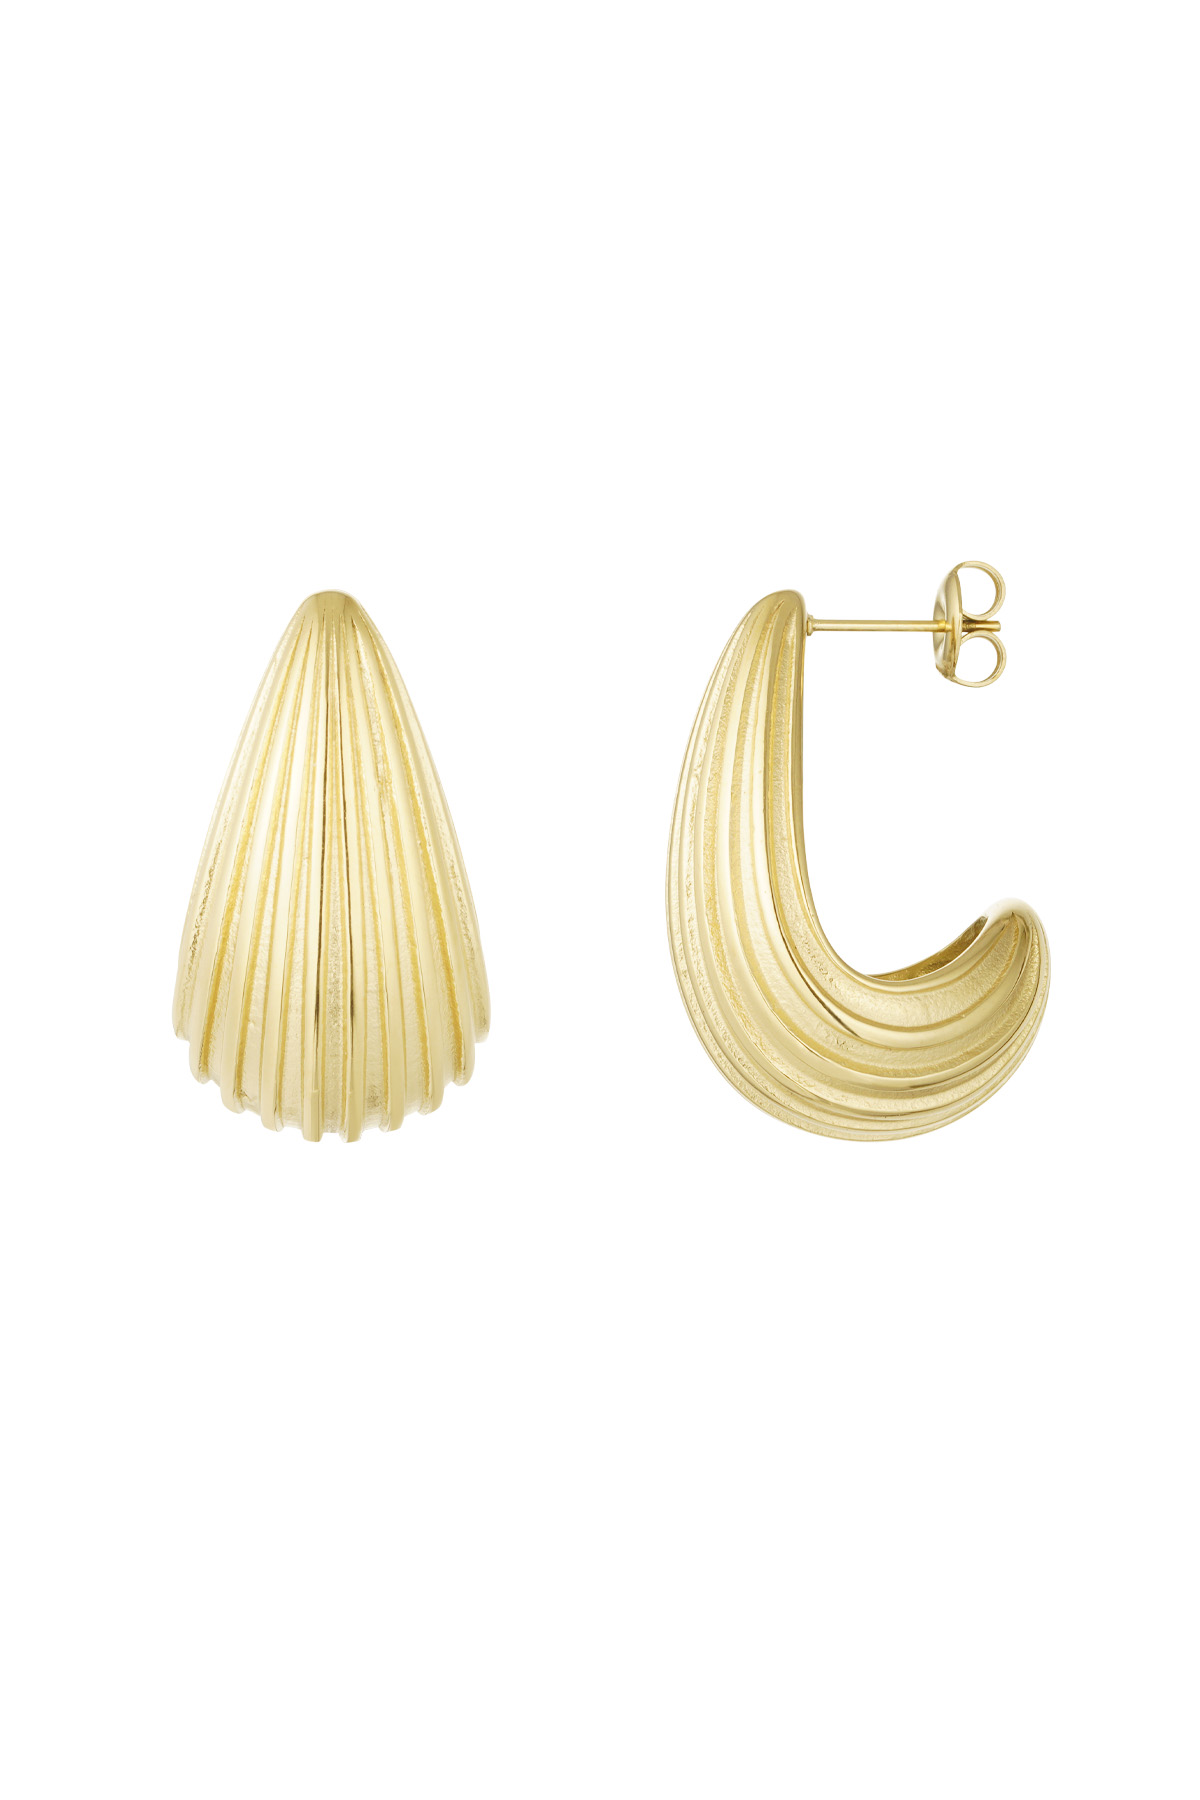 Earrings drop open structure - gold h5 